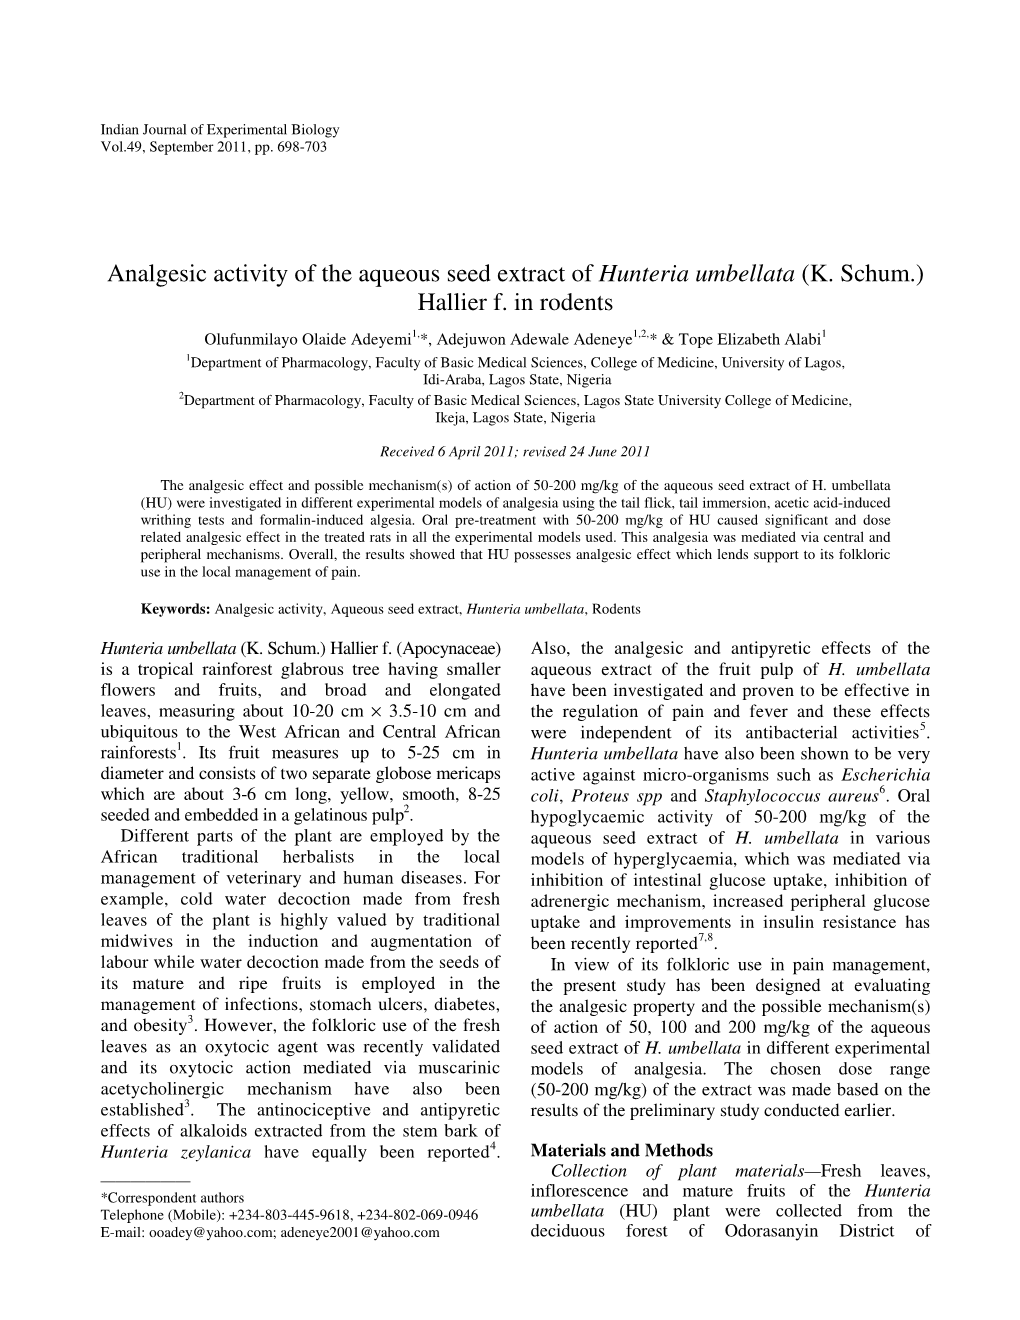 Analgesic Activity of the Aqueous Seed Extract of Hunteria Umbellata (K